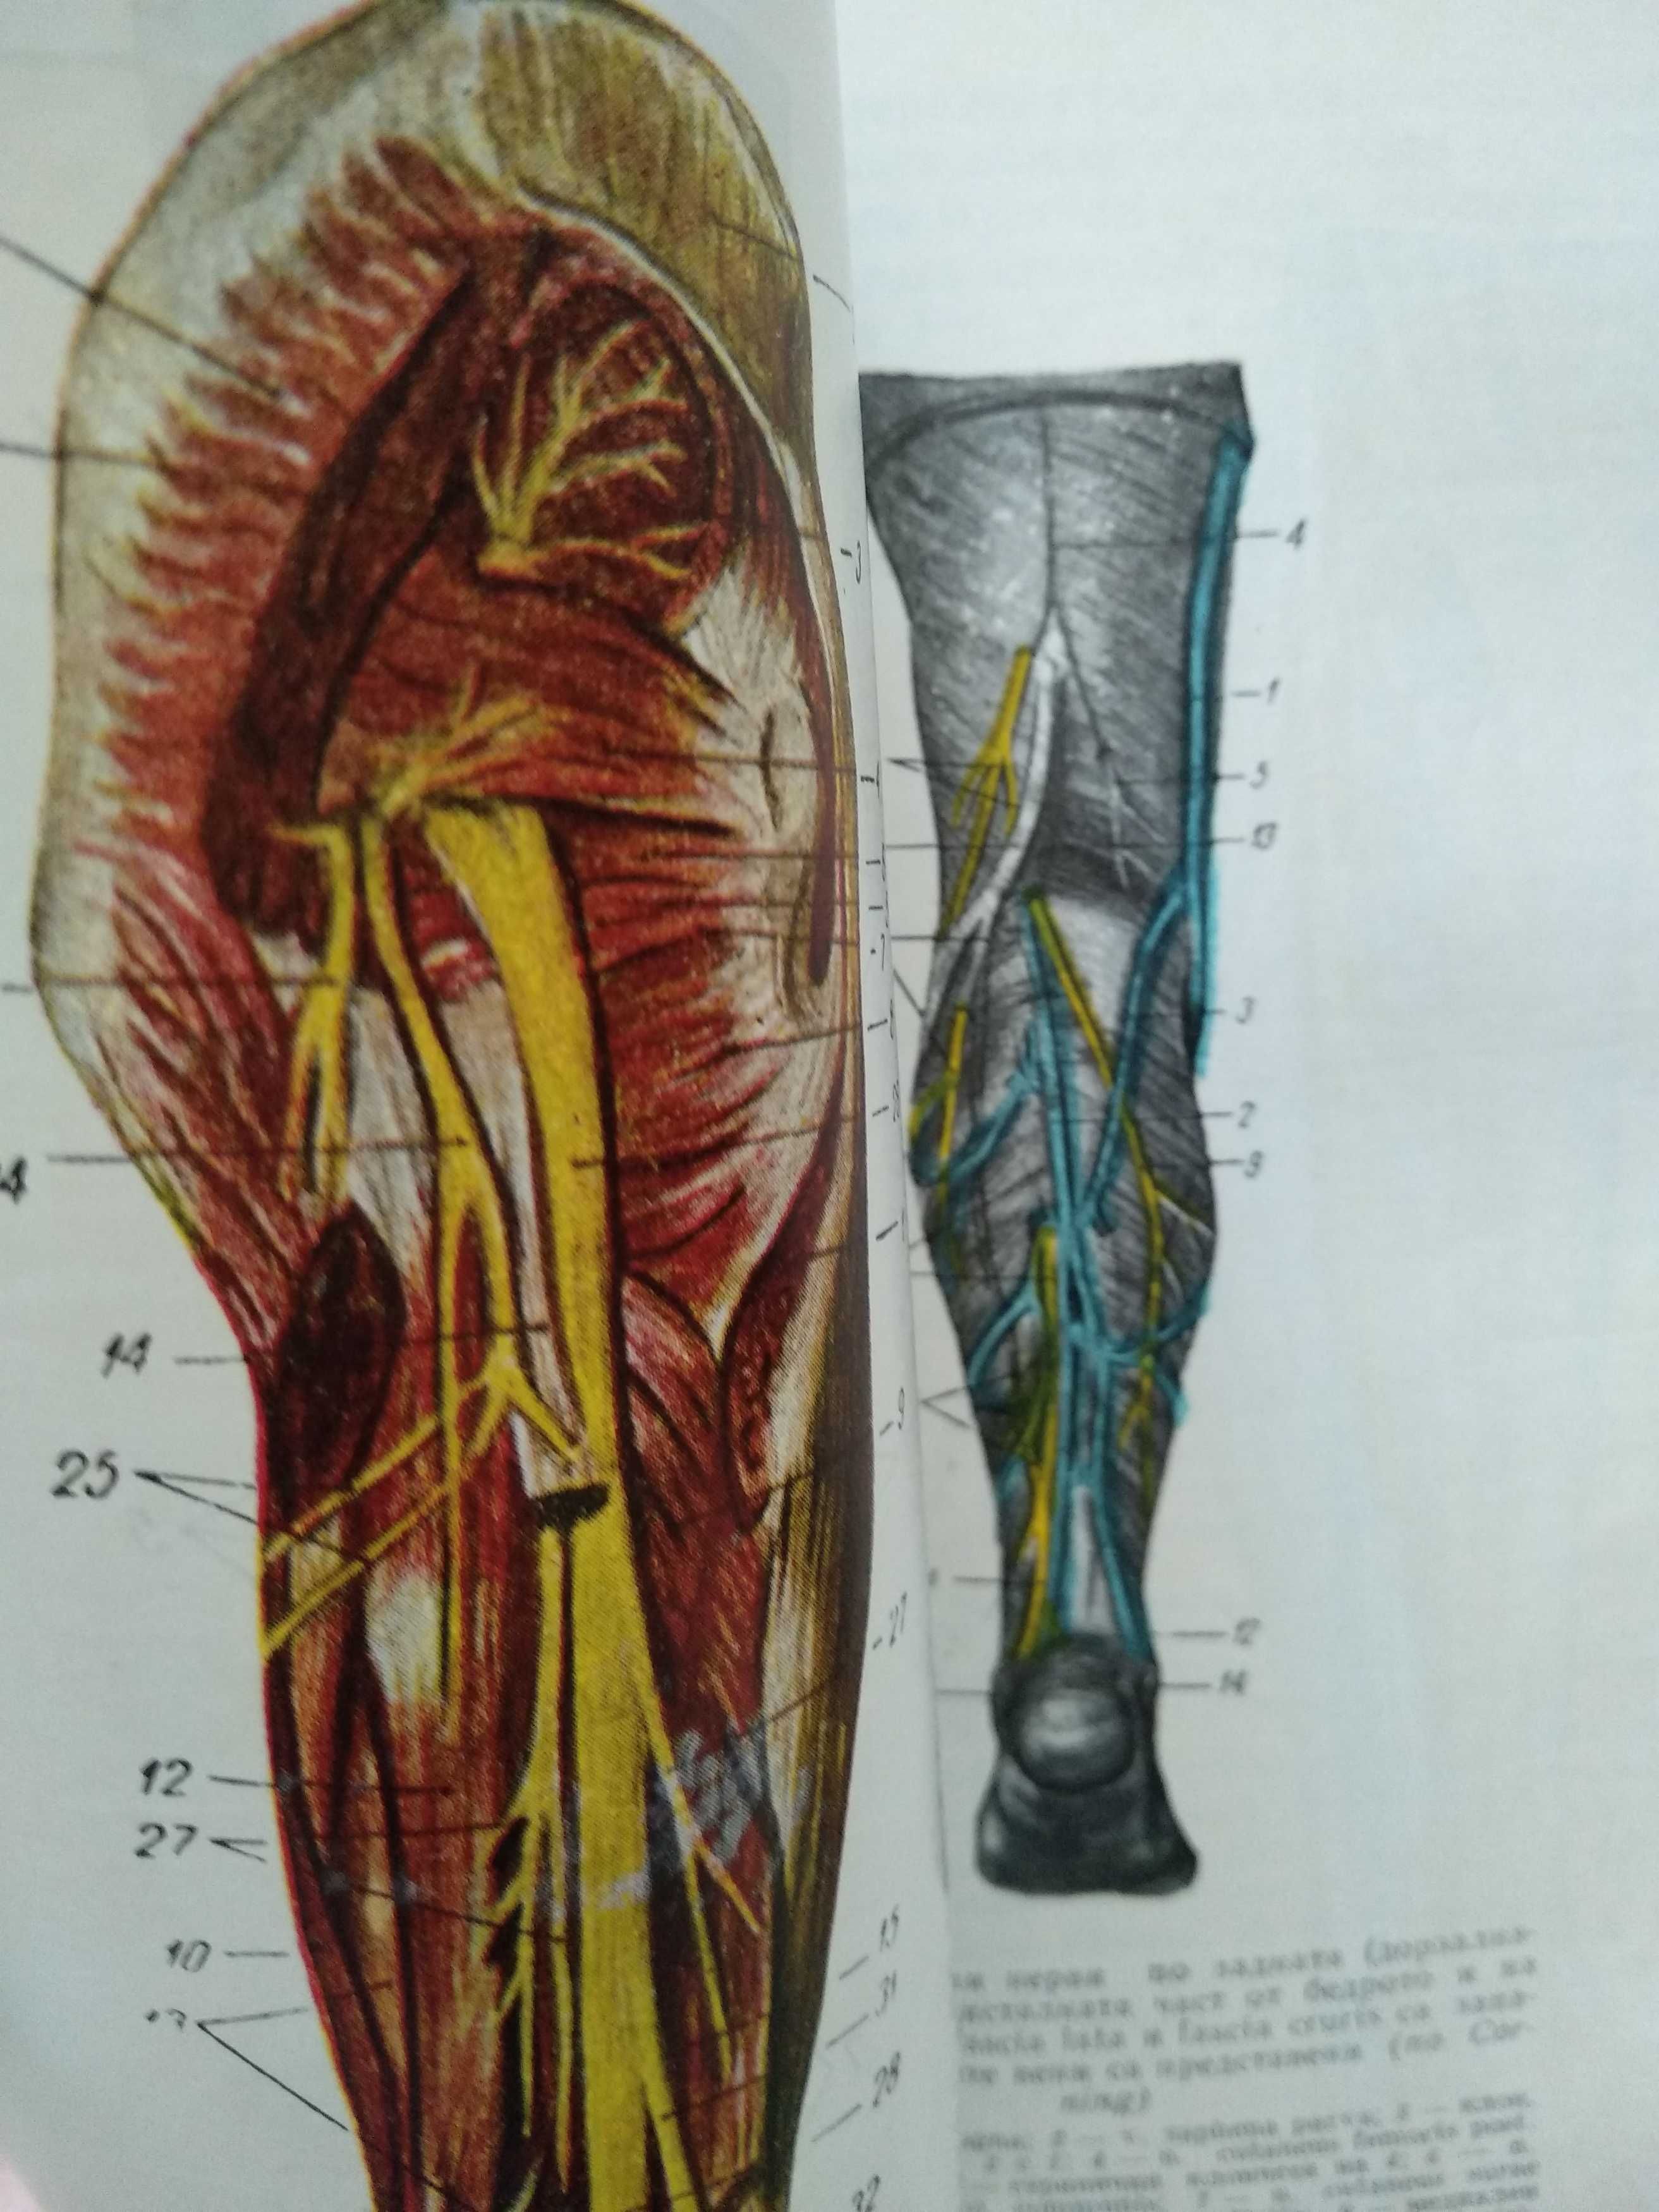 Анатомия на човека-атлас-том-2 -Цветна-1964г-Станишев, Балан, Каданов